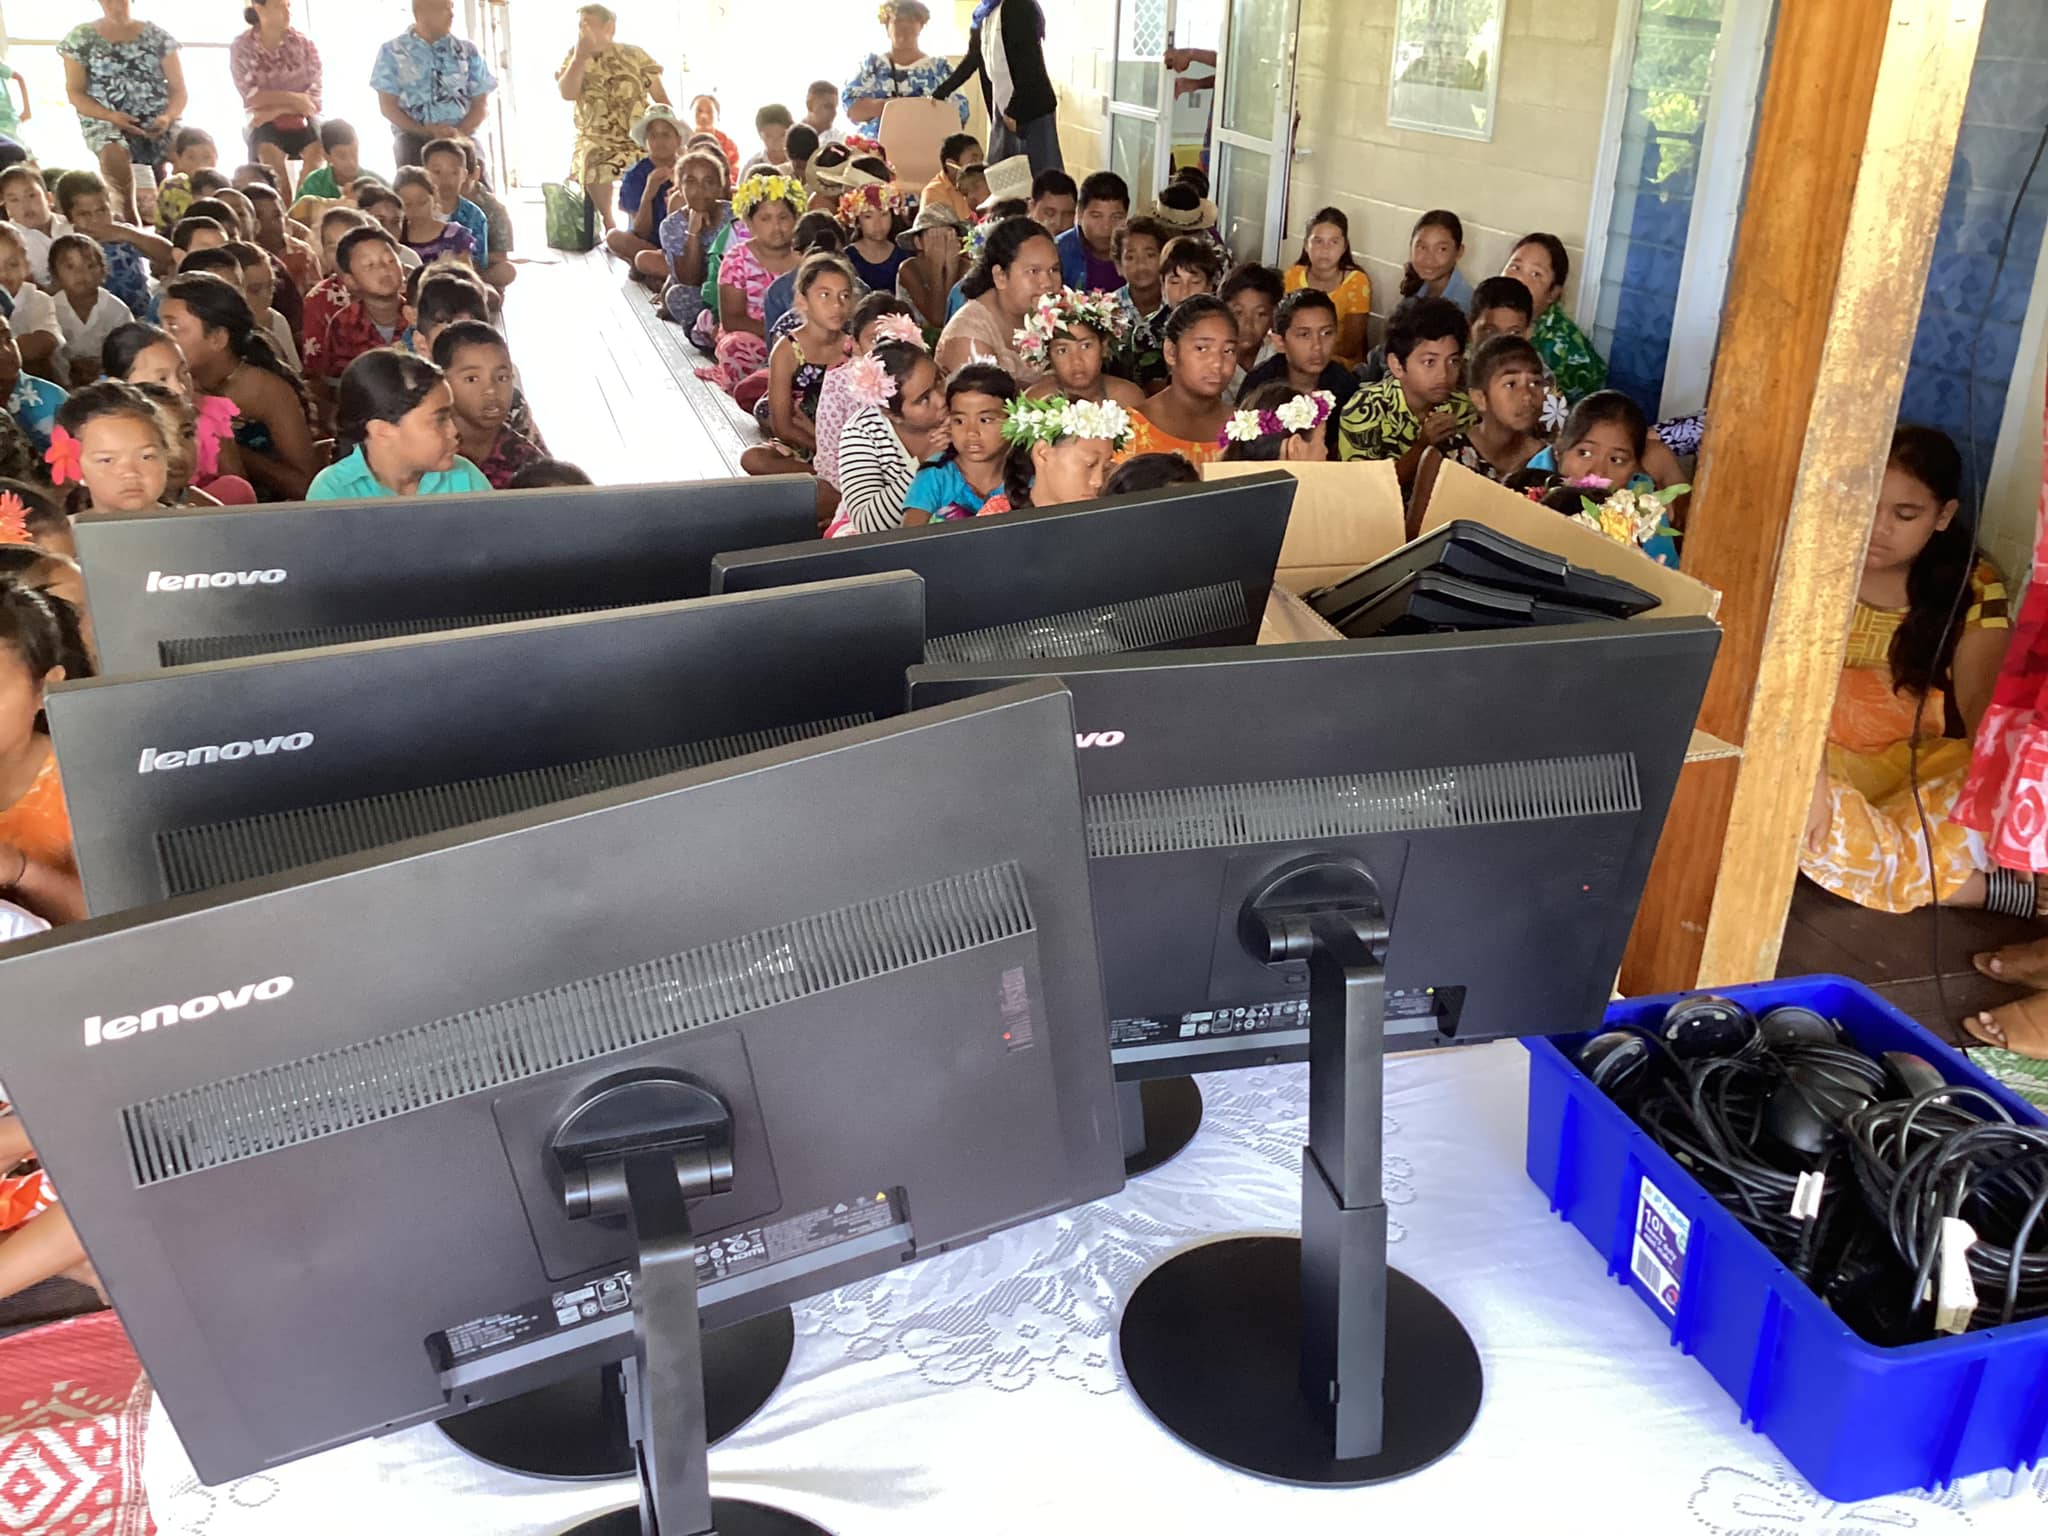 School receives refurbished computers